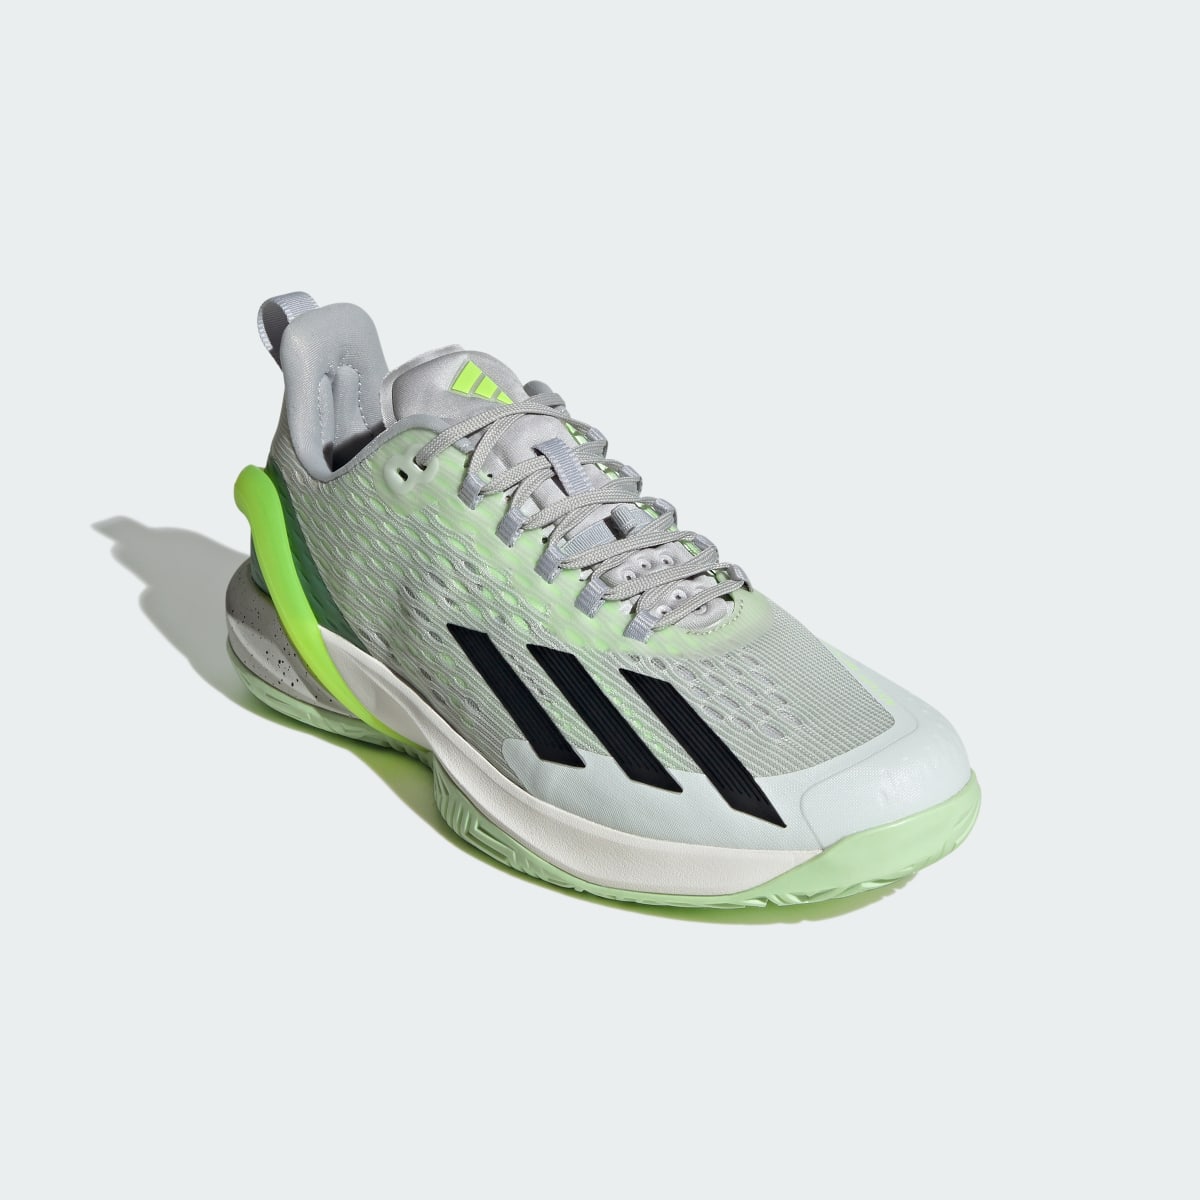 Adidas Chaussure de tennis adizero Cybersonic. 5